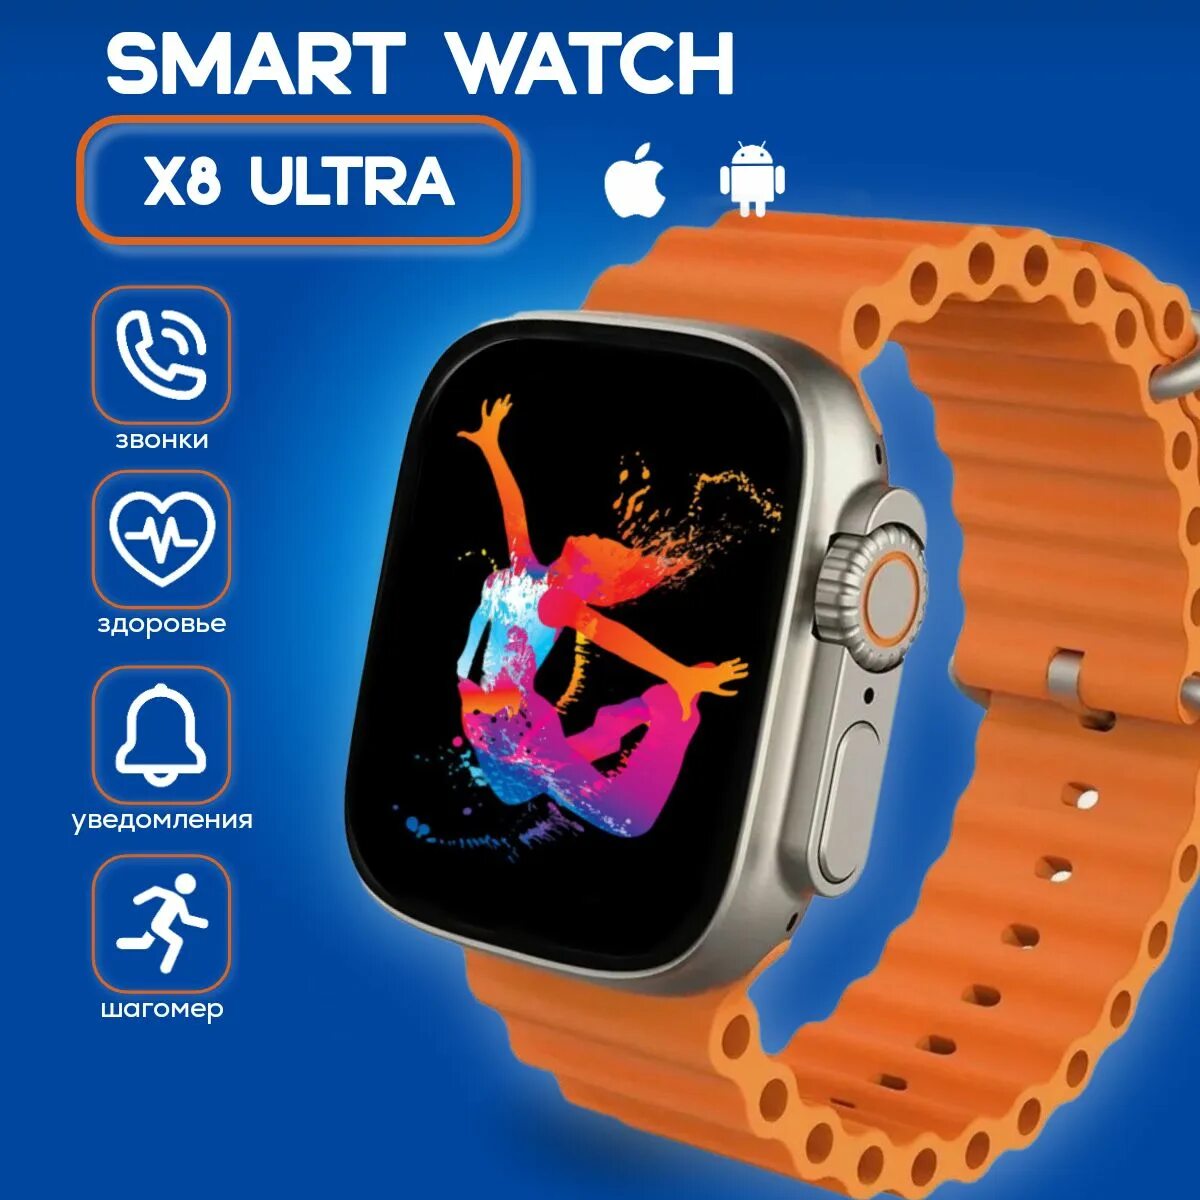 Включи ультра часы. X8 Ultra Smart watch. SMARTWATCH 8 Ultra. Смарт часы x8 Plus Ultra. Умные часы x8 Ultra смарт часы.